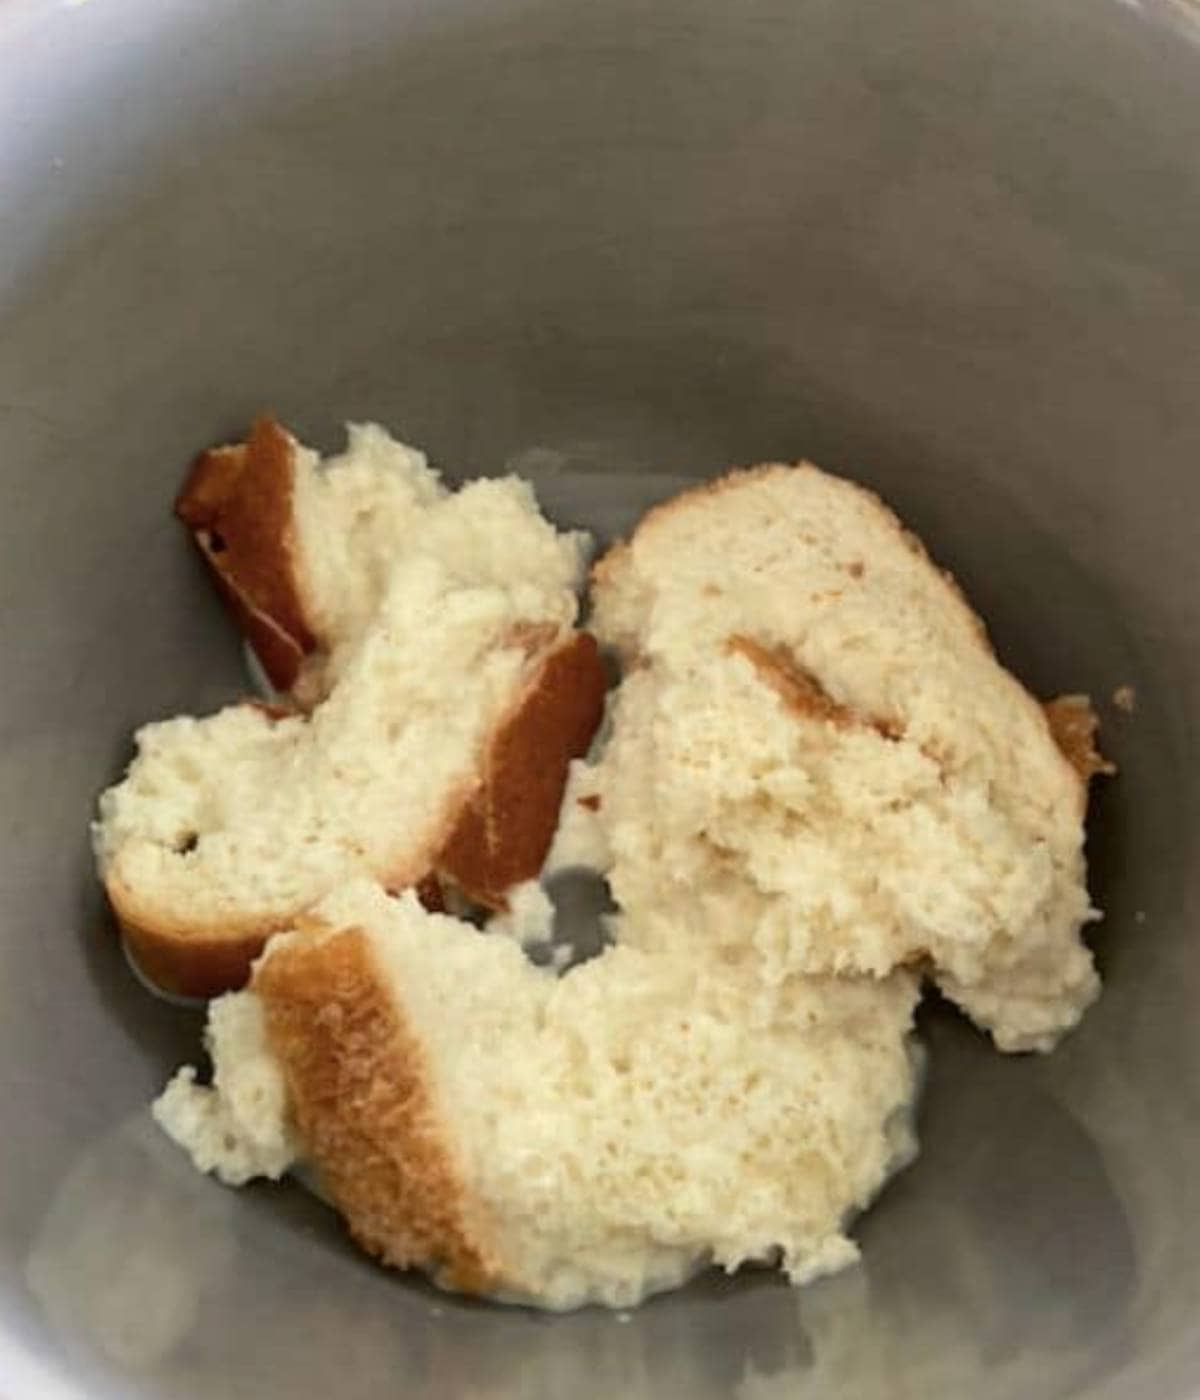 Bread soaked in milk. 